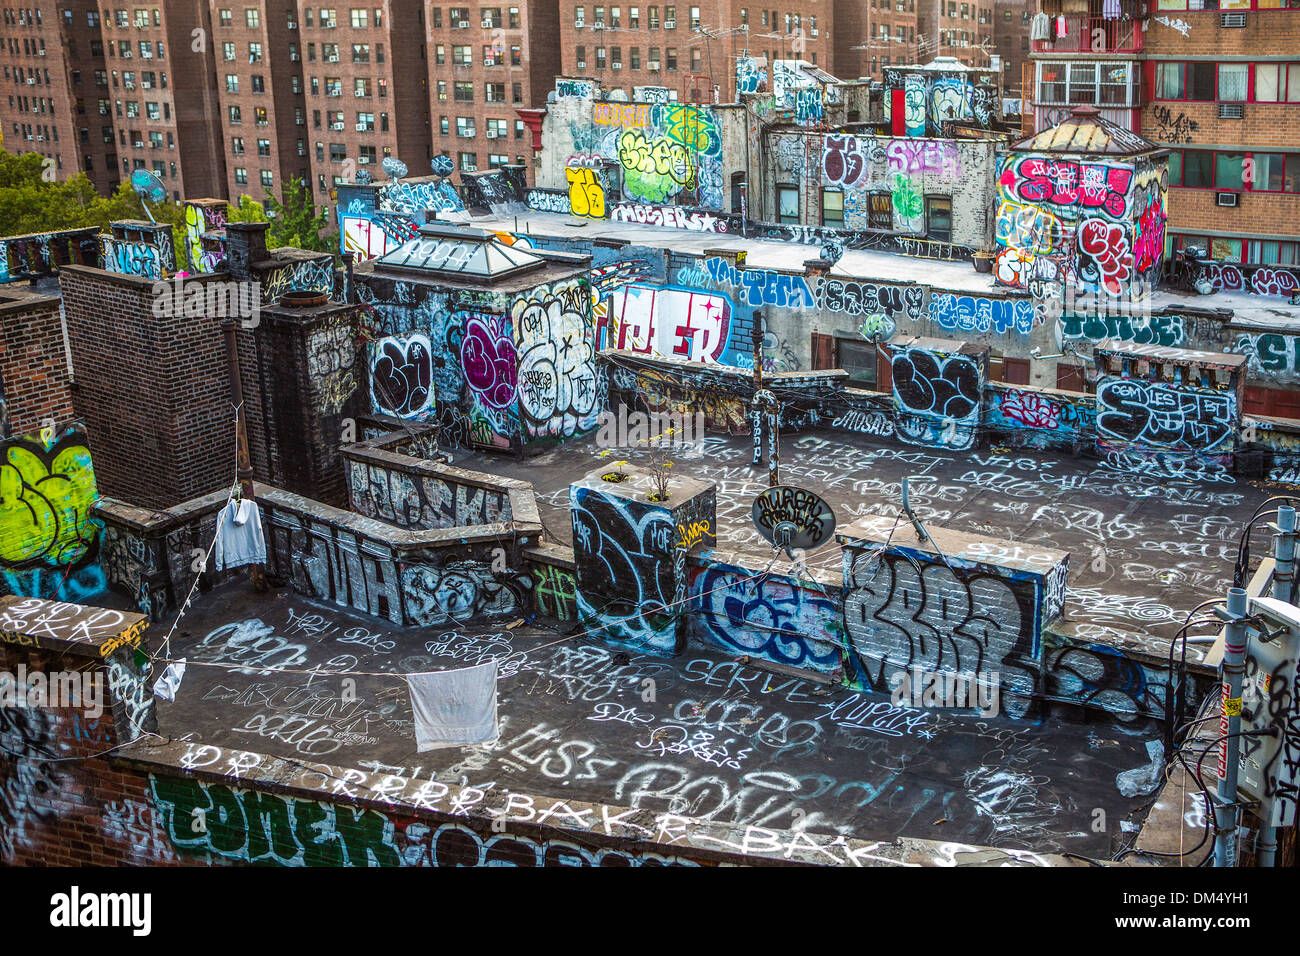 New York, Stati Uniti d'America, Stati Uniti, America, arte città colorate, cultura, sporco, downtown, graffiti, tetto, urban, arte urbana Foto Stock